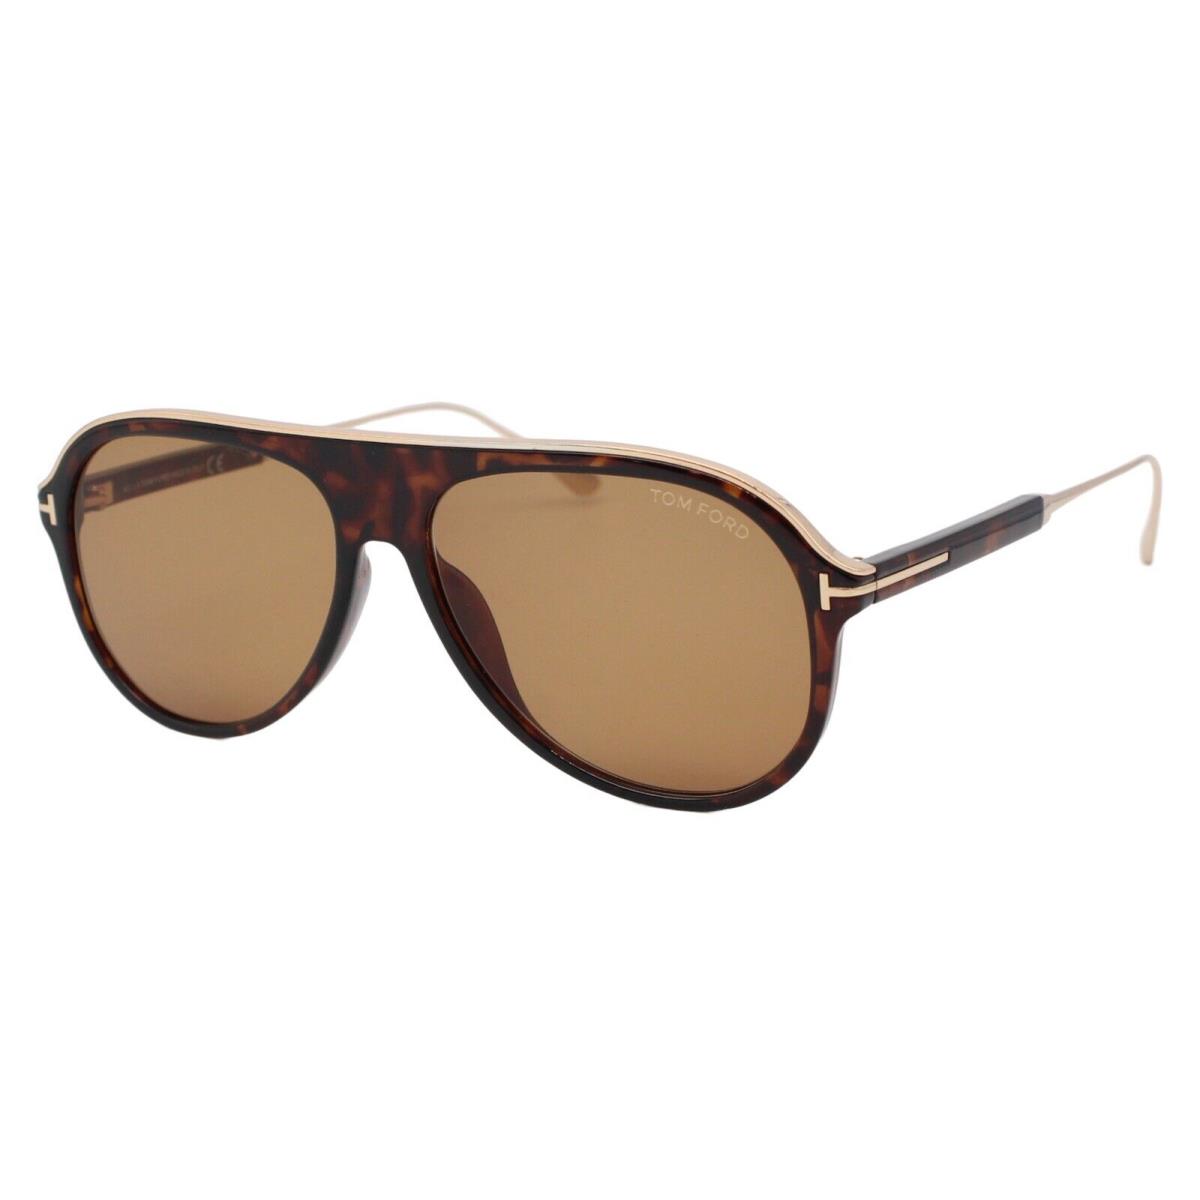 Tom Ford Nicholai-02 624 52E Gold Tortoise Brown Lens Sunglasses 57-14-145 Wcase